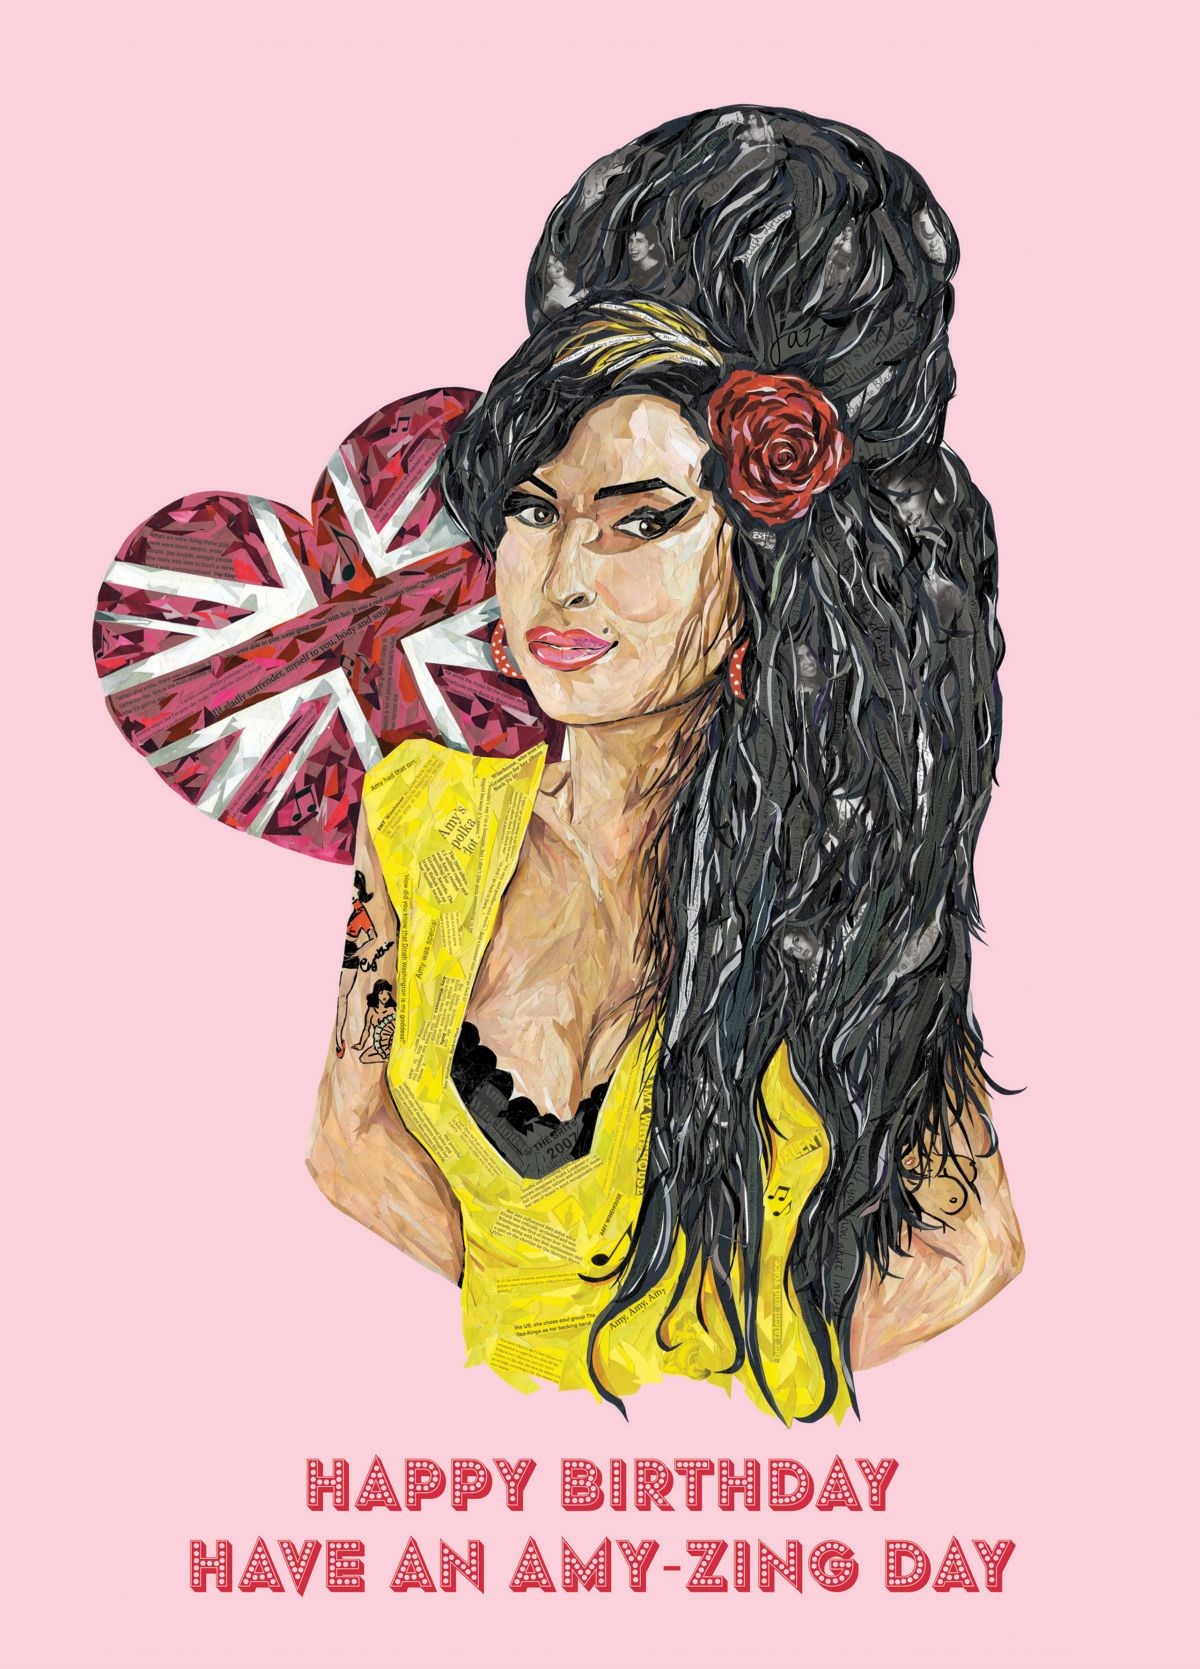 Amy Winehouse Birthday Card